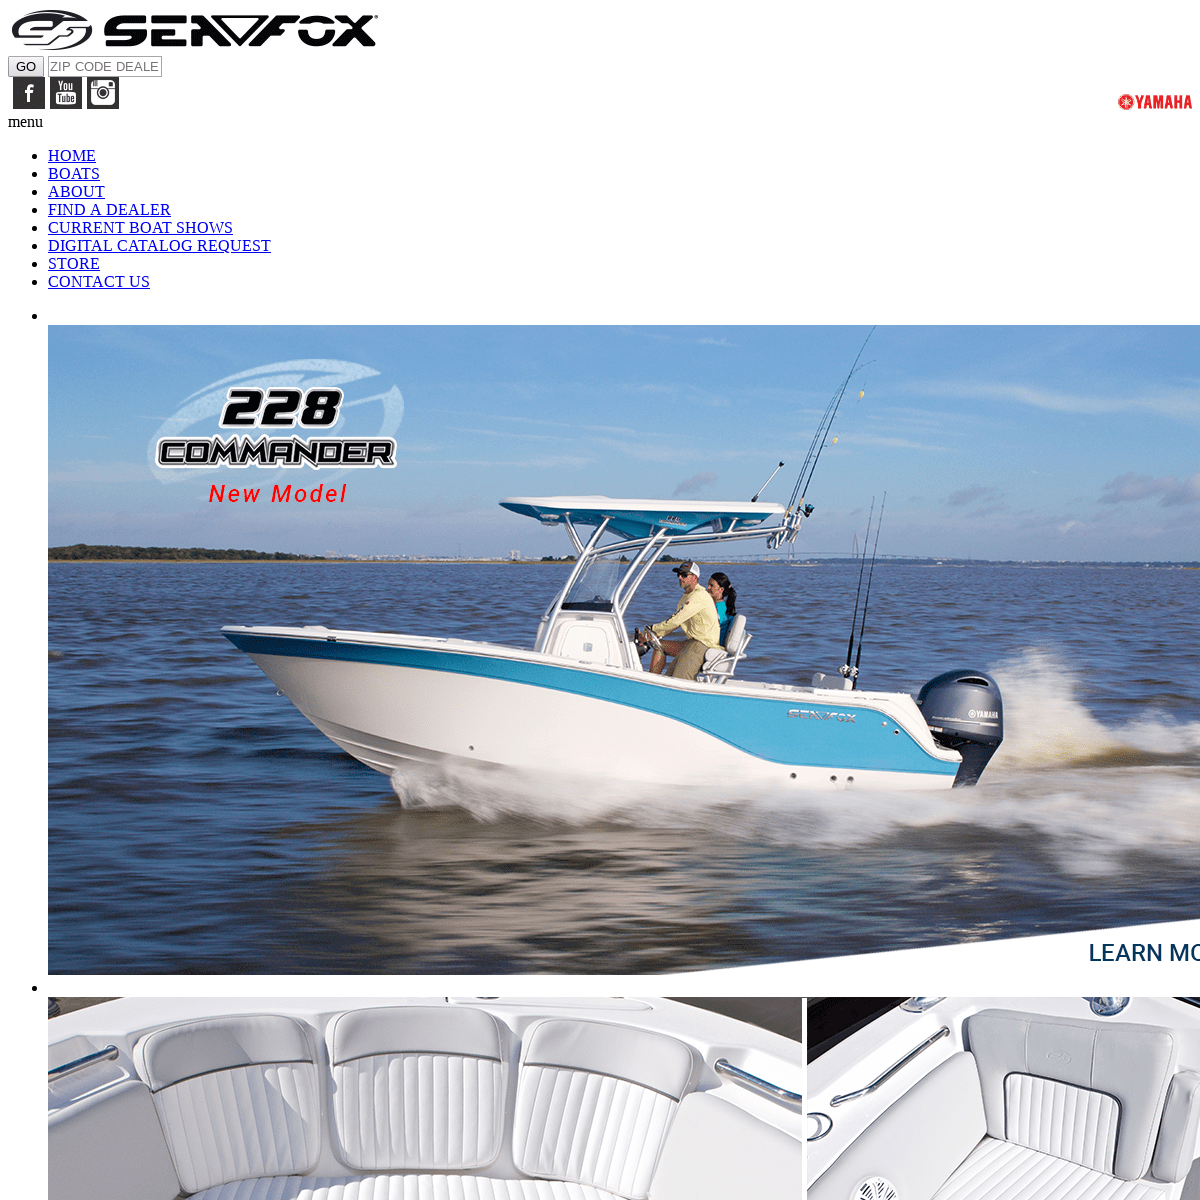 Sea Fox Boats - Home page